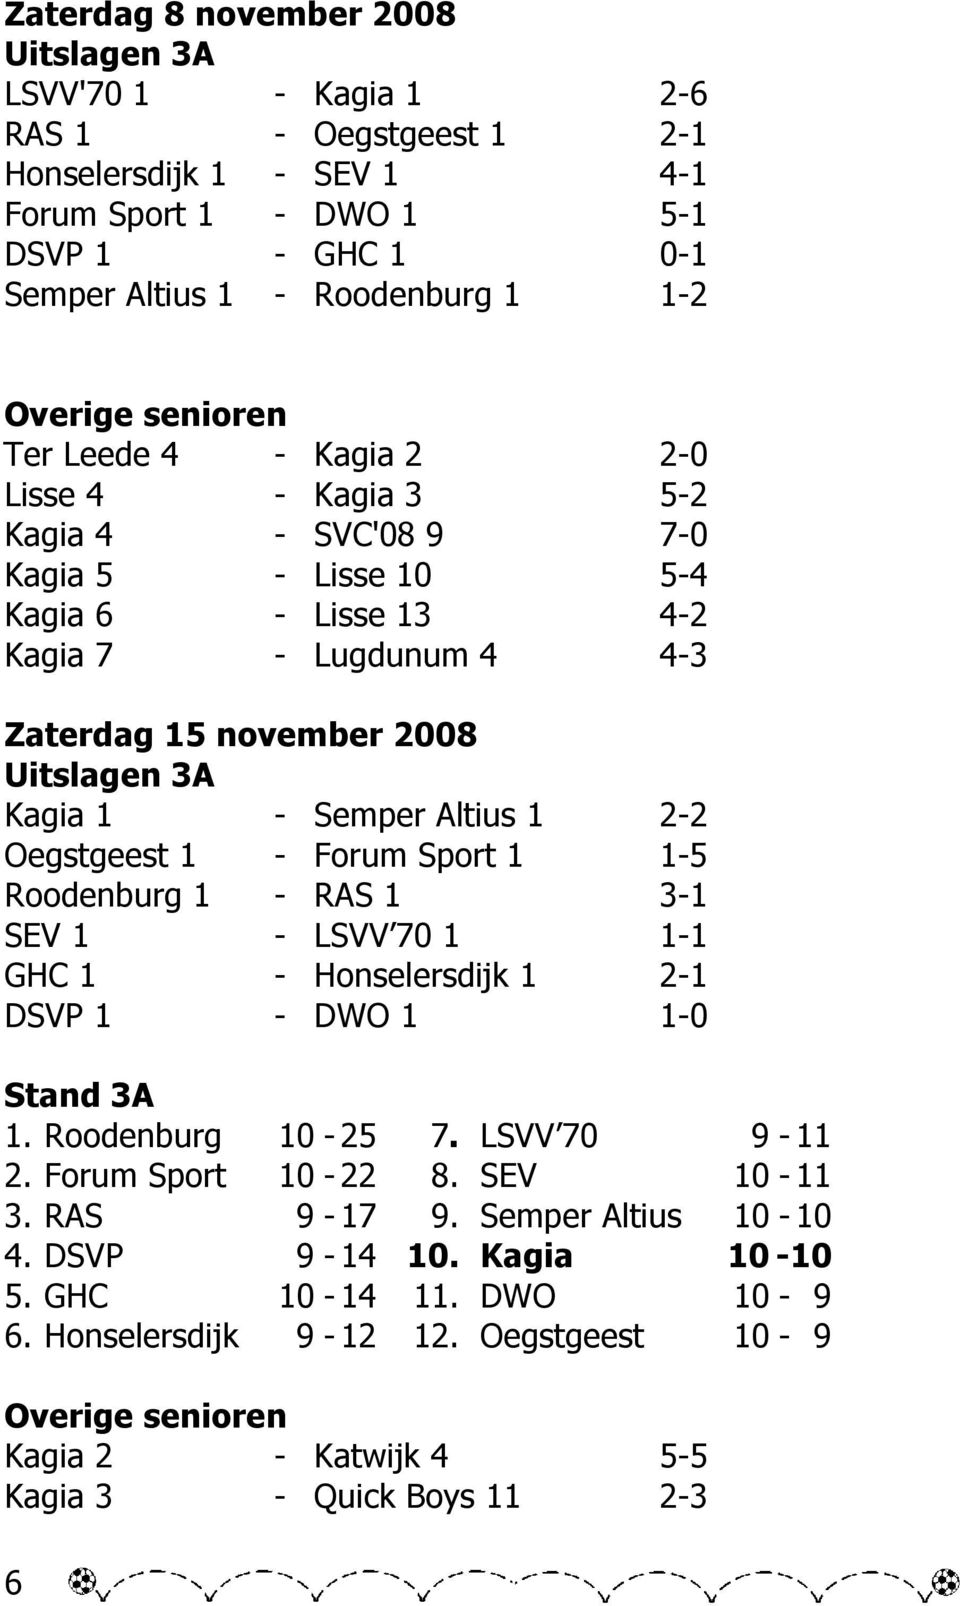 Kagia 1 - Semper Altius 1 2-2 Oegstgeest 1 - Forum Sport 1 1-5 Roodenburg 1 - RAS 1 3-1 SEV 1 - LSVV 70 1 1-1 GHC 1 - Honselersdijk 1 2-1 DSVP 1 - DWO 1 1-0 Stand 3A 1. Roodenburg 10-25 7.